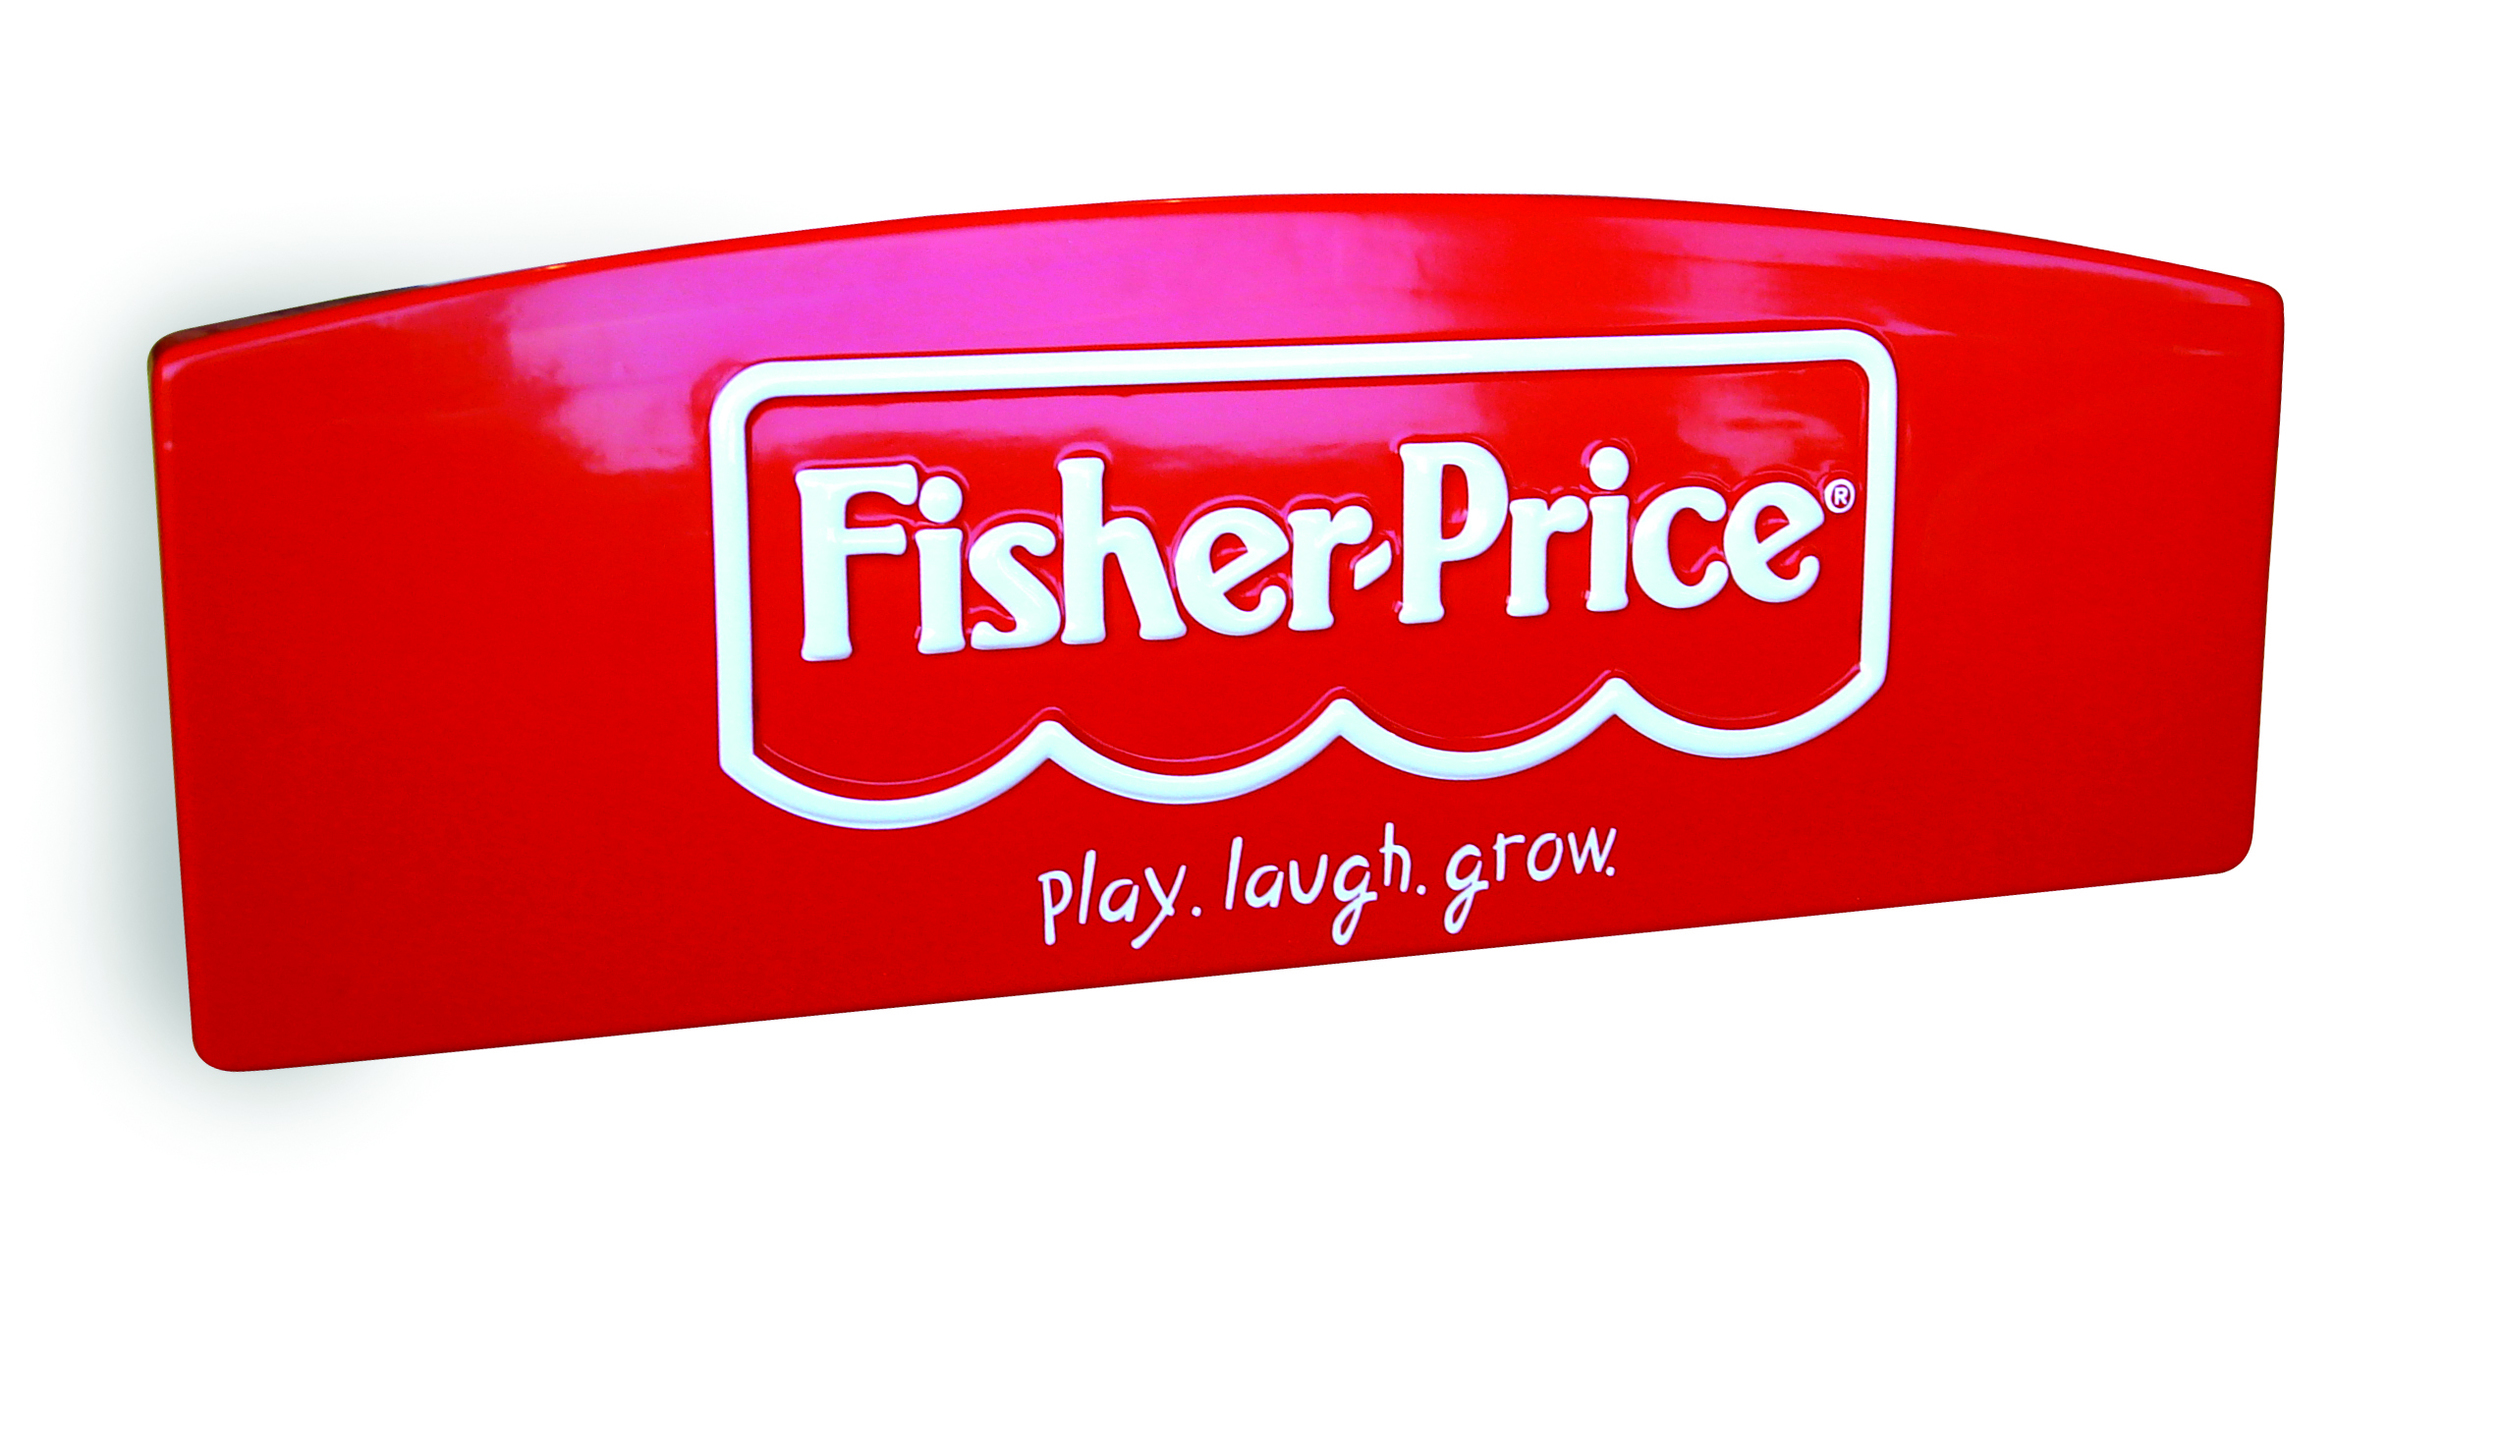 Fisher Price Sign.jpg